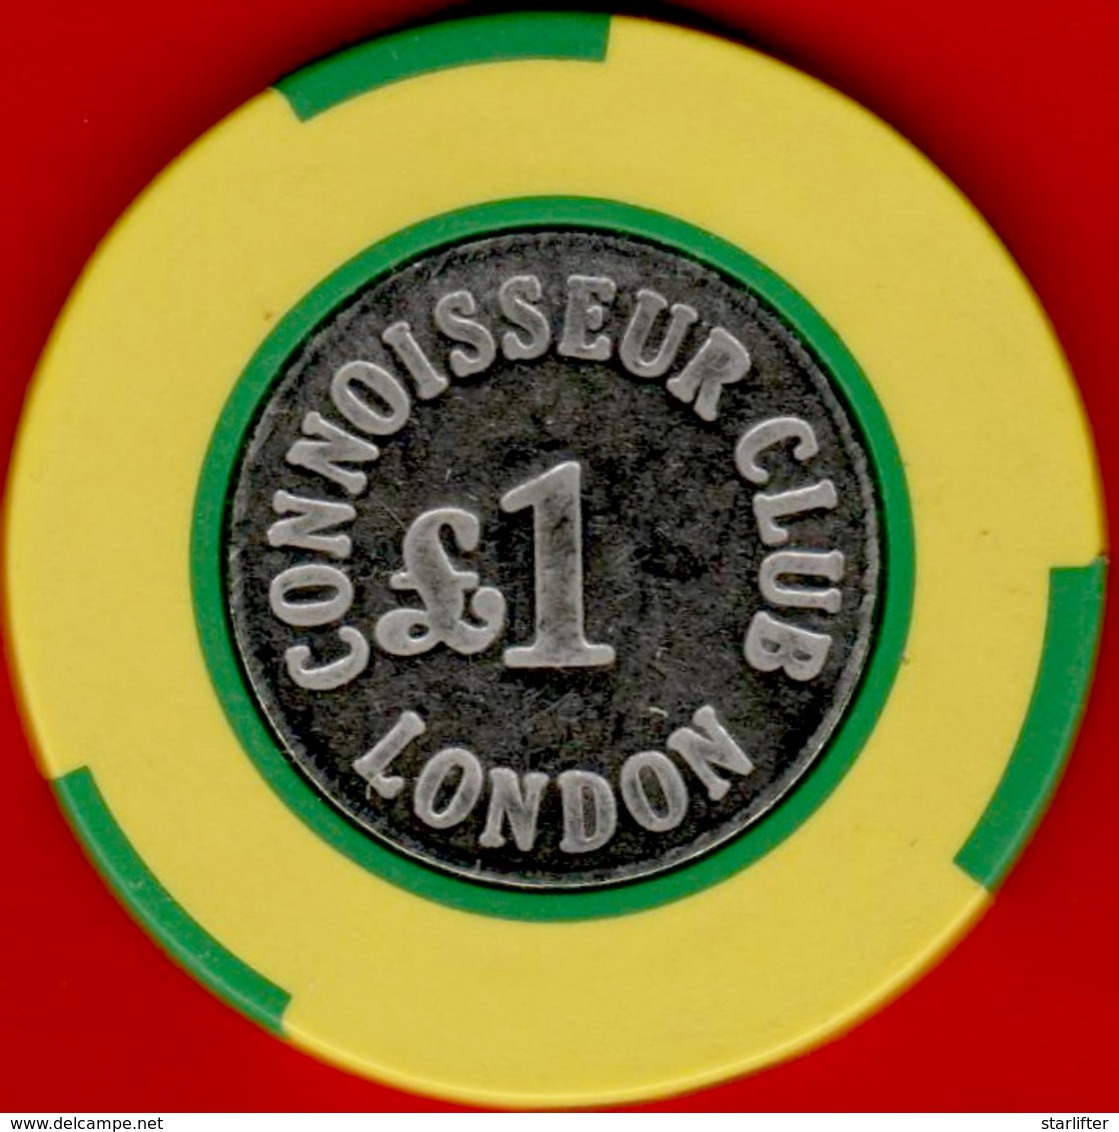 £1 Casino Chip. Connoisseur Club, London, U.K. L20. - Casino